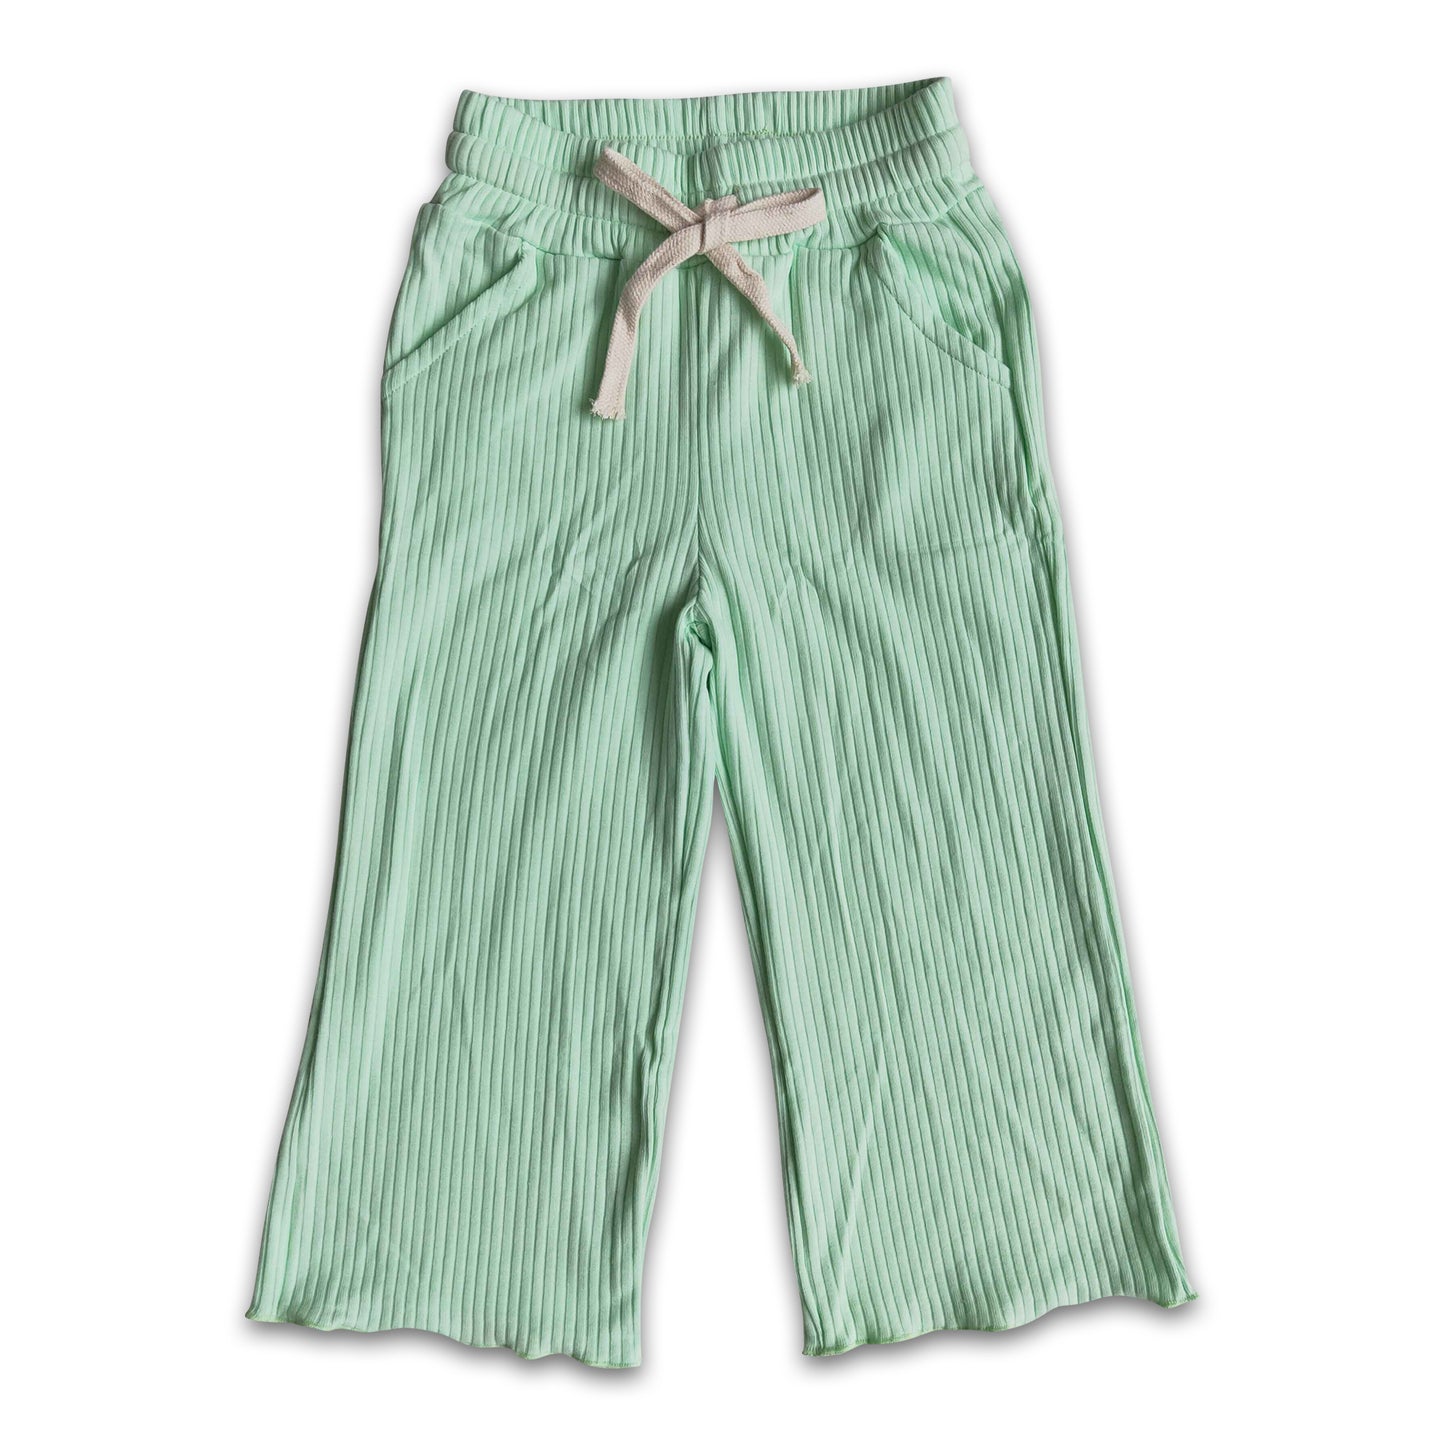 Mint stripe cotton elastic waistband pants